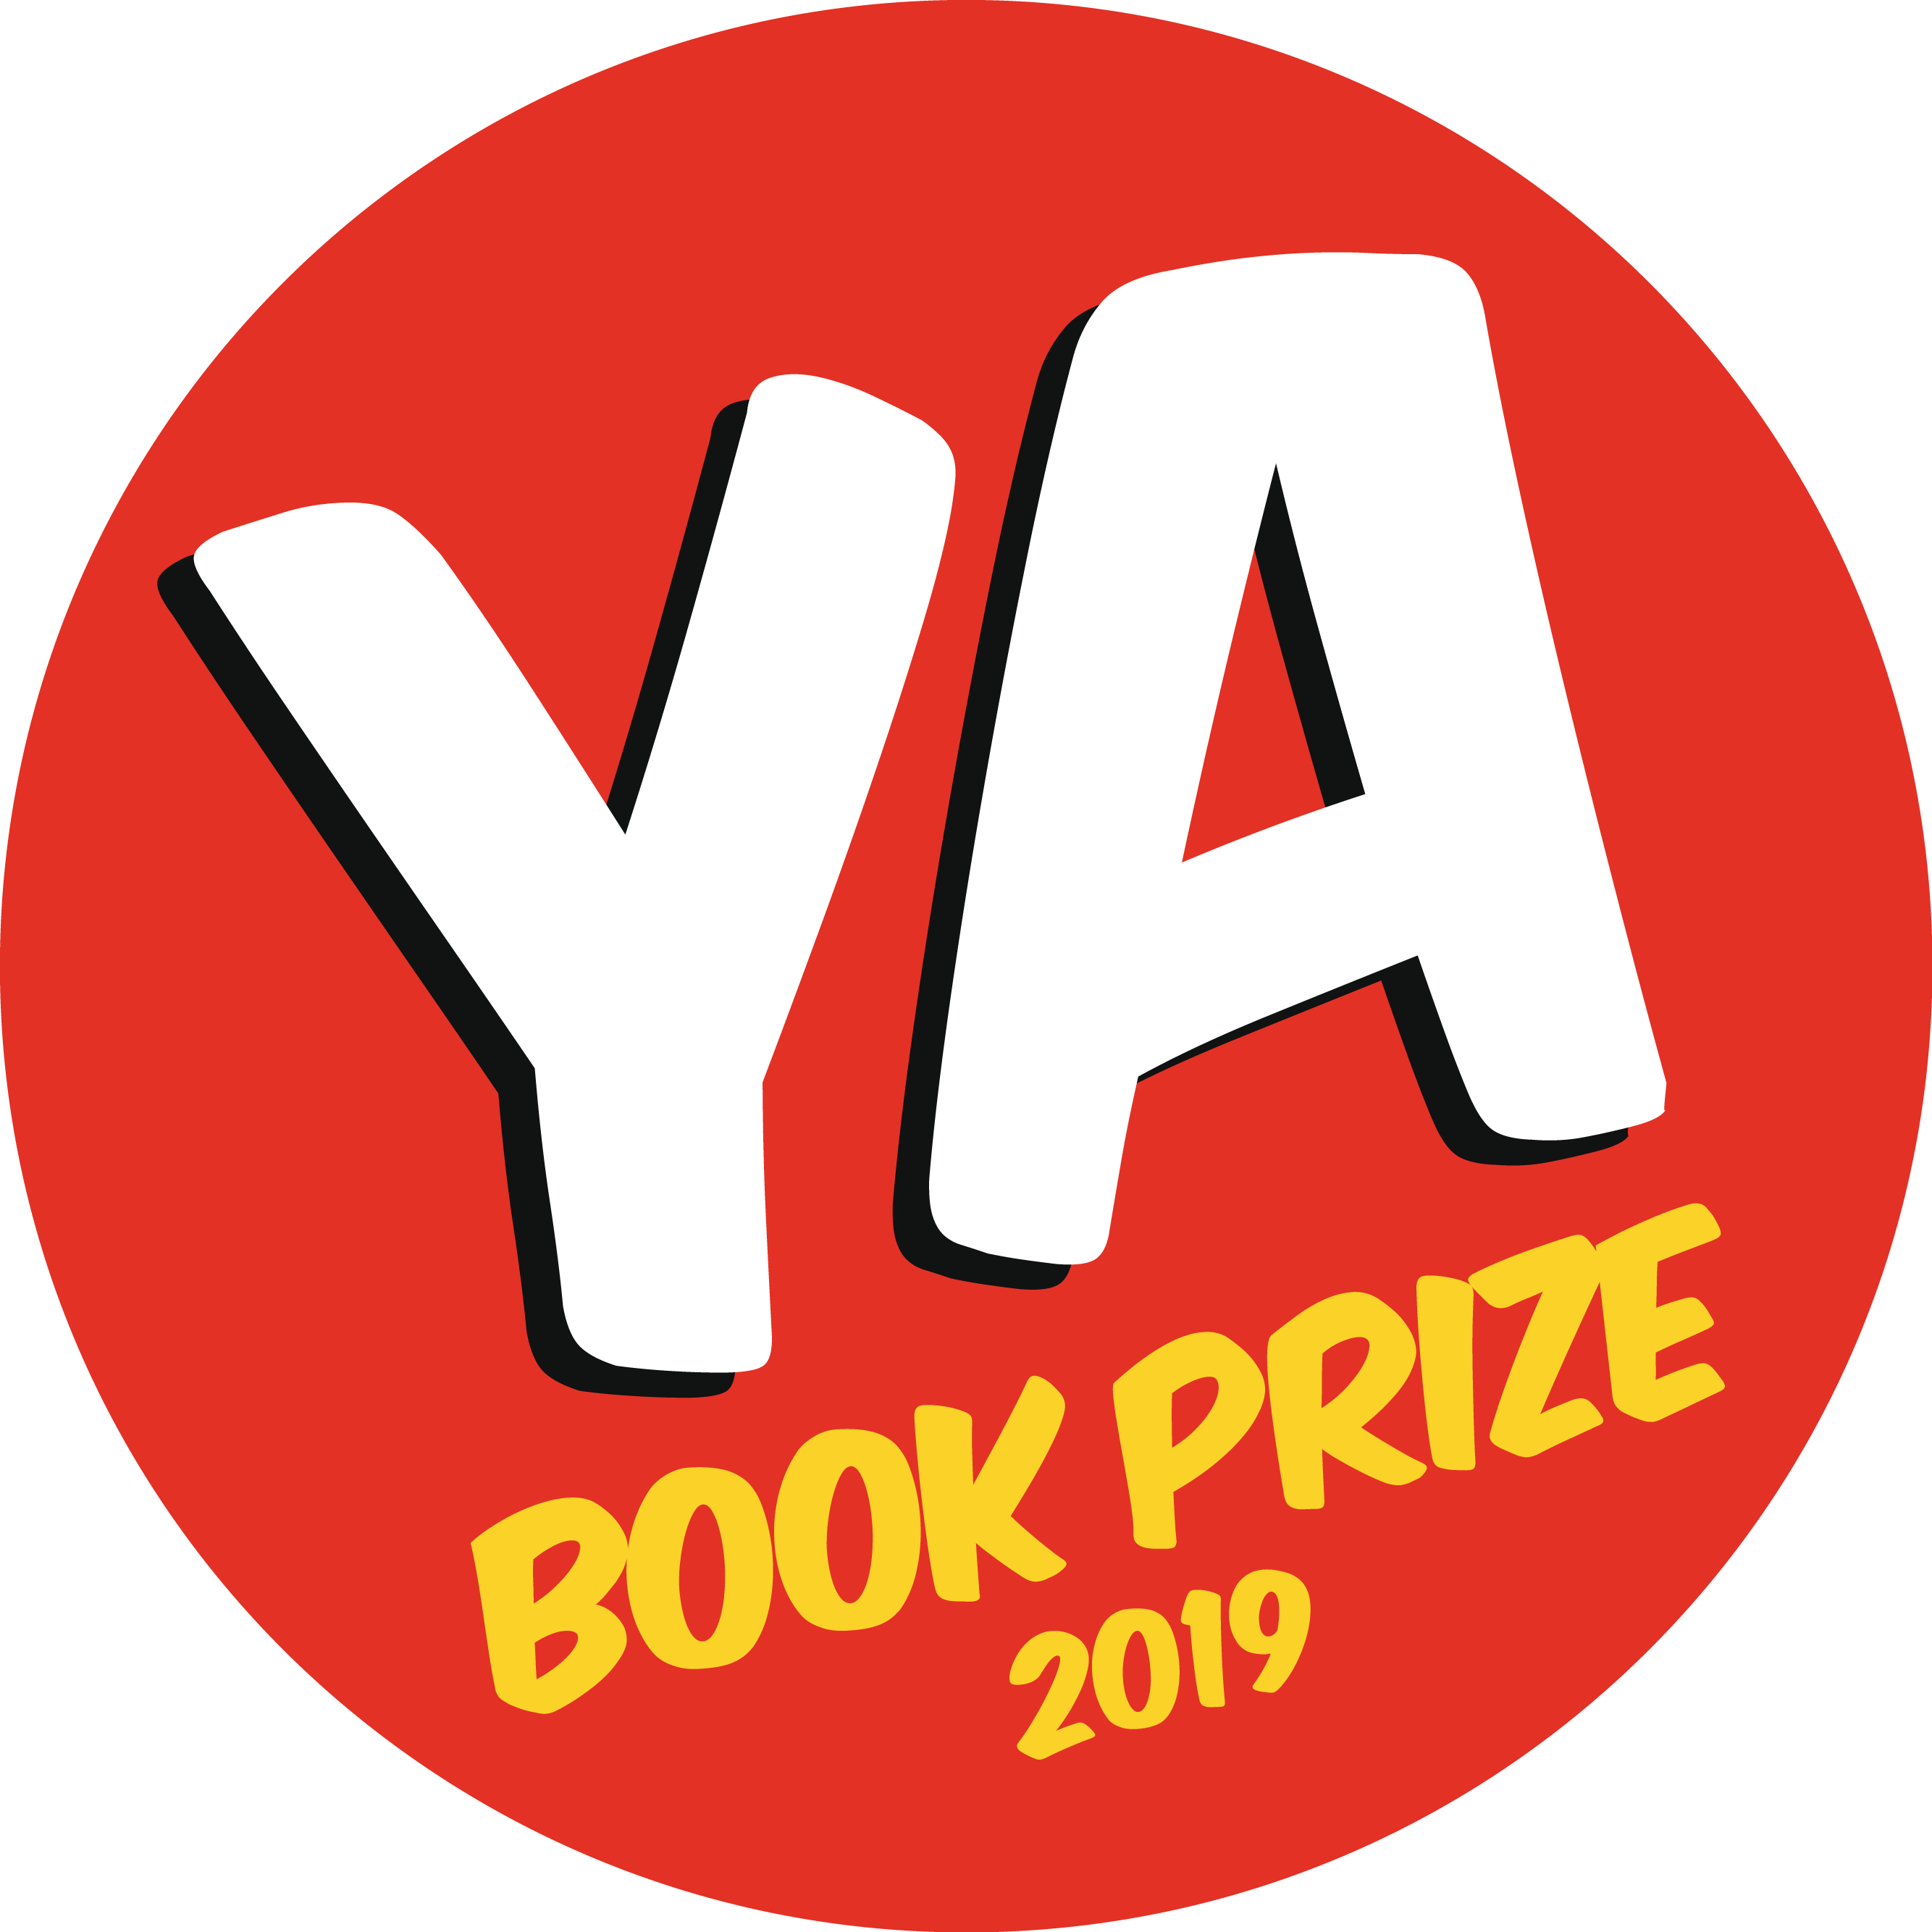 Bookseller Logo - YA Book Prize 2019 | The Bookseller